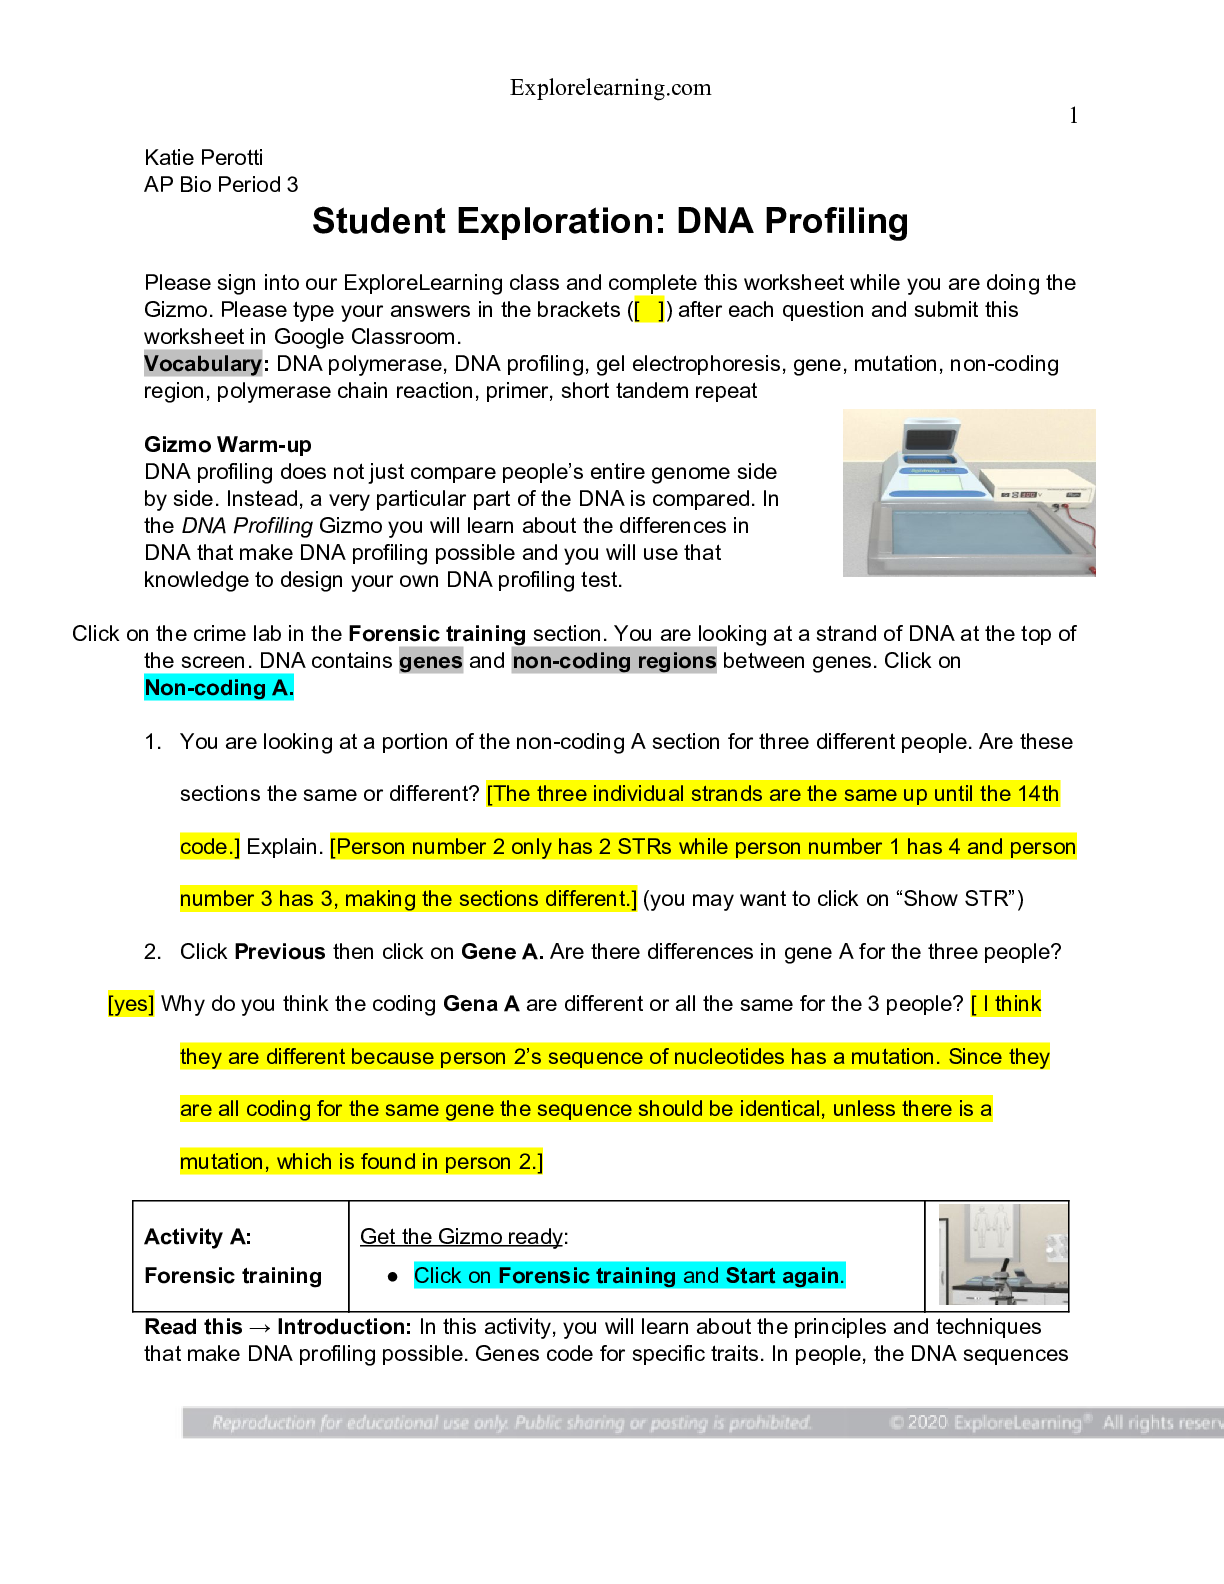 Student Exploration: DNA Profiling